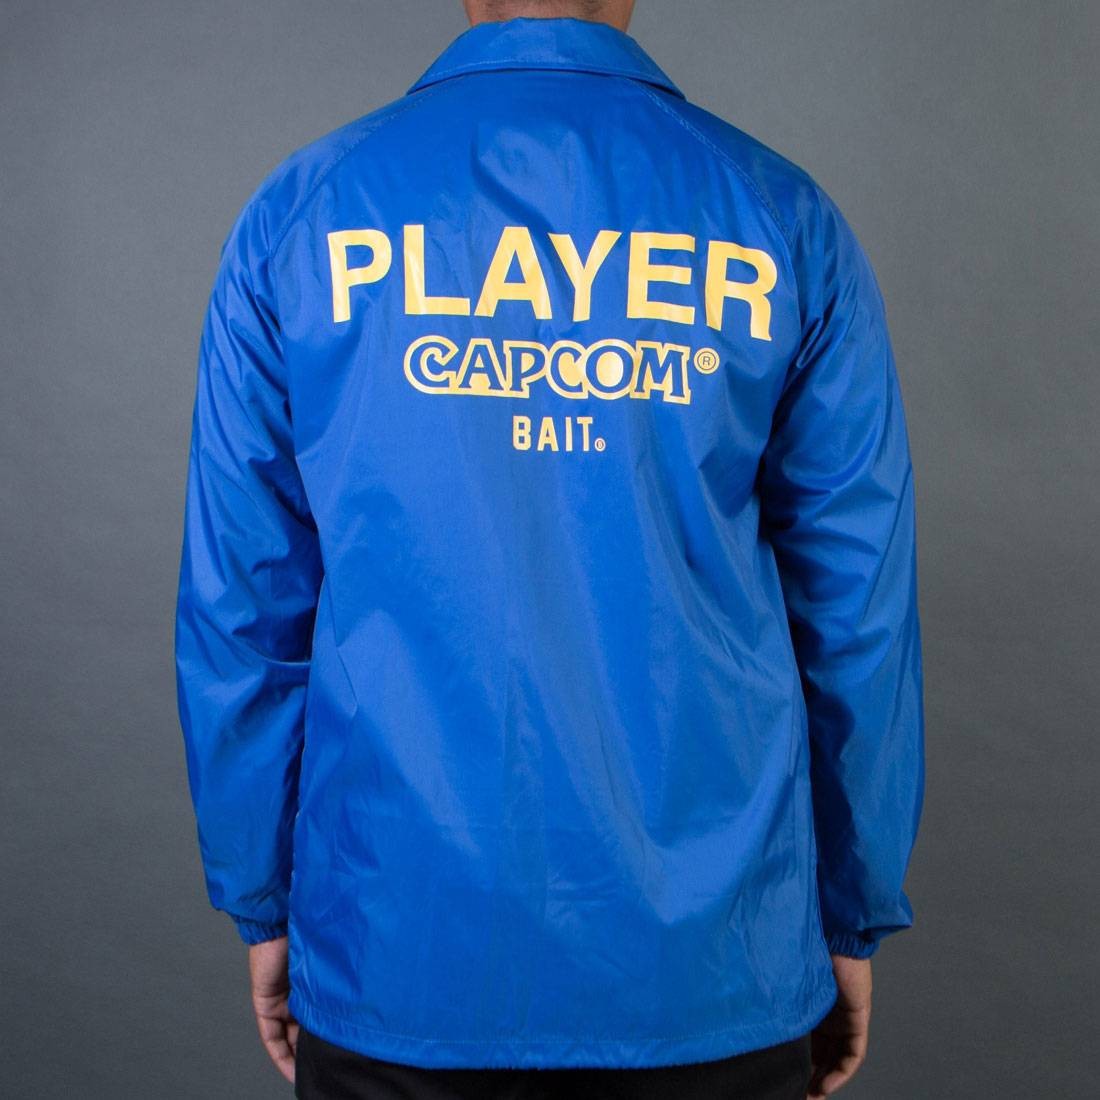 Tricot Turtleneck Sweater Men Capcom Player Jacket (blue / royal)